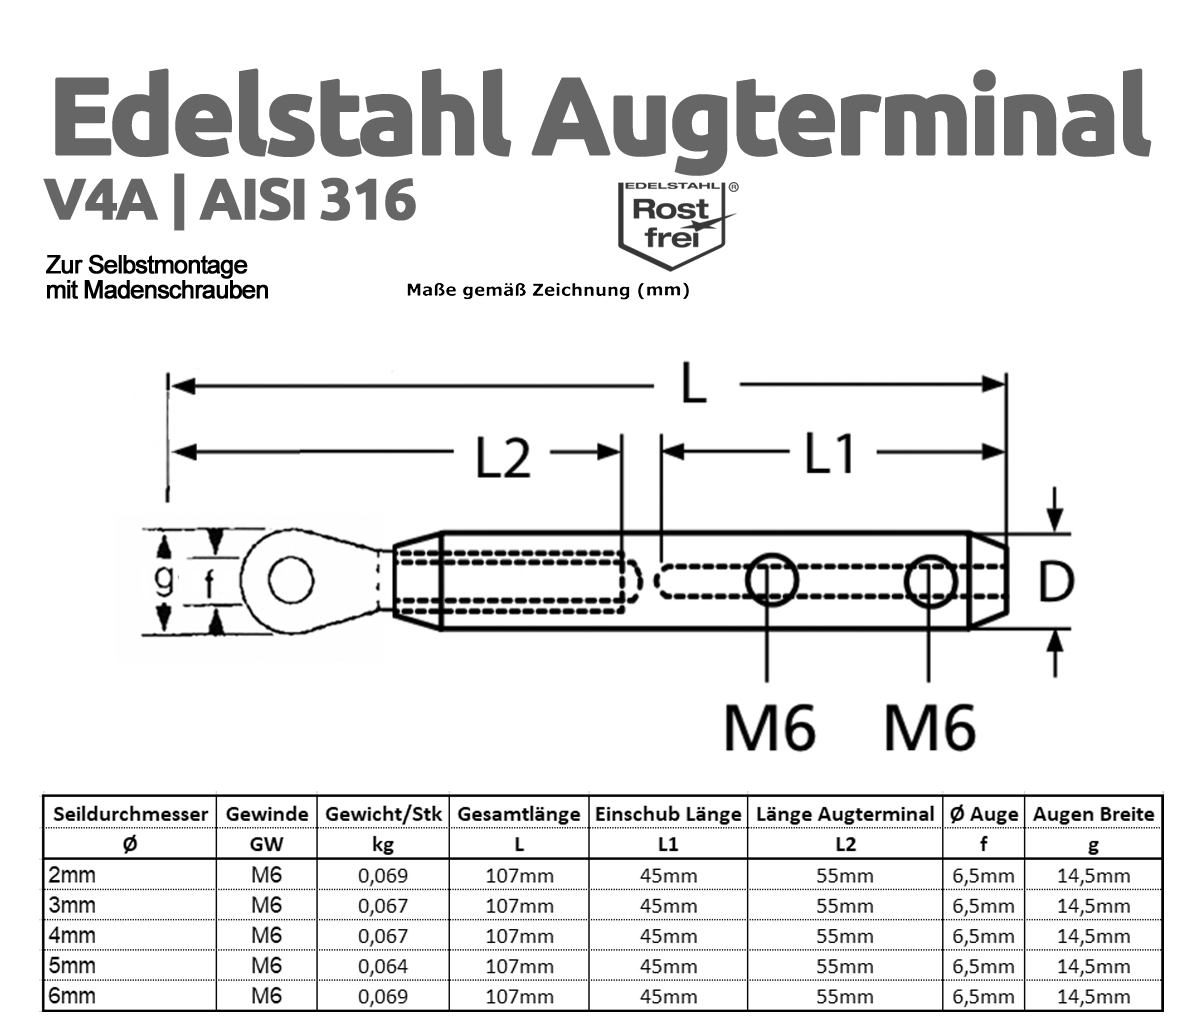 Edelstahl_Terminal_Selbstmontage_Augterminal_Grafik_12009EkdxPbpT8pmj